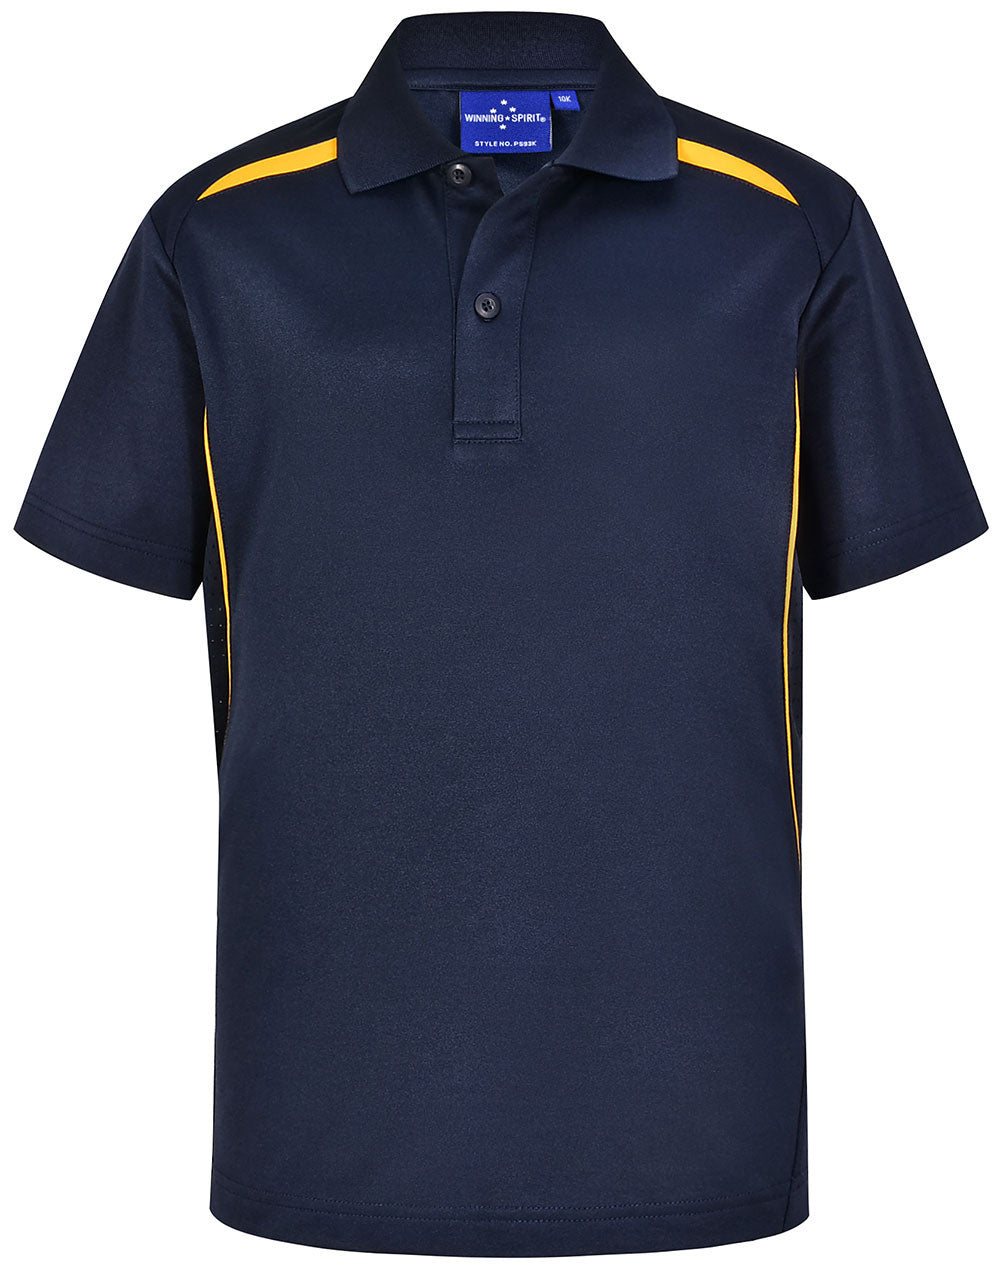 Winning Spirit Kid's Sustainable Poly/Cotton Polo Shirt PS93K Casual Wear Winning Spirit Navy/Gold 4K 